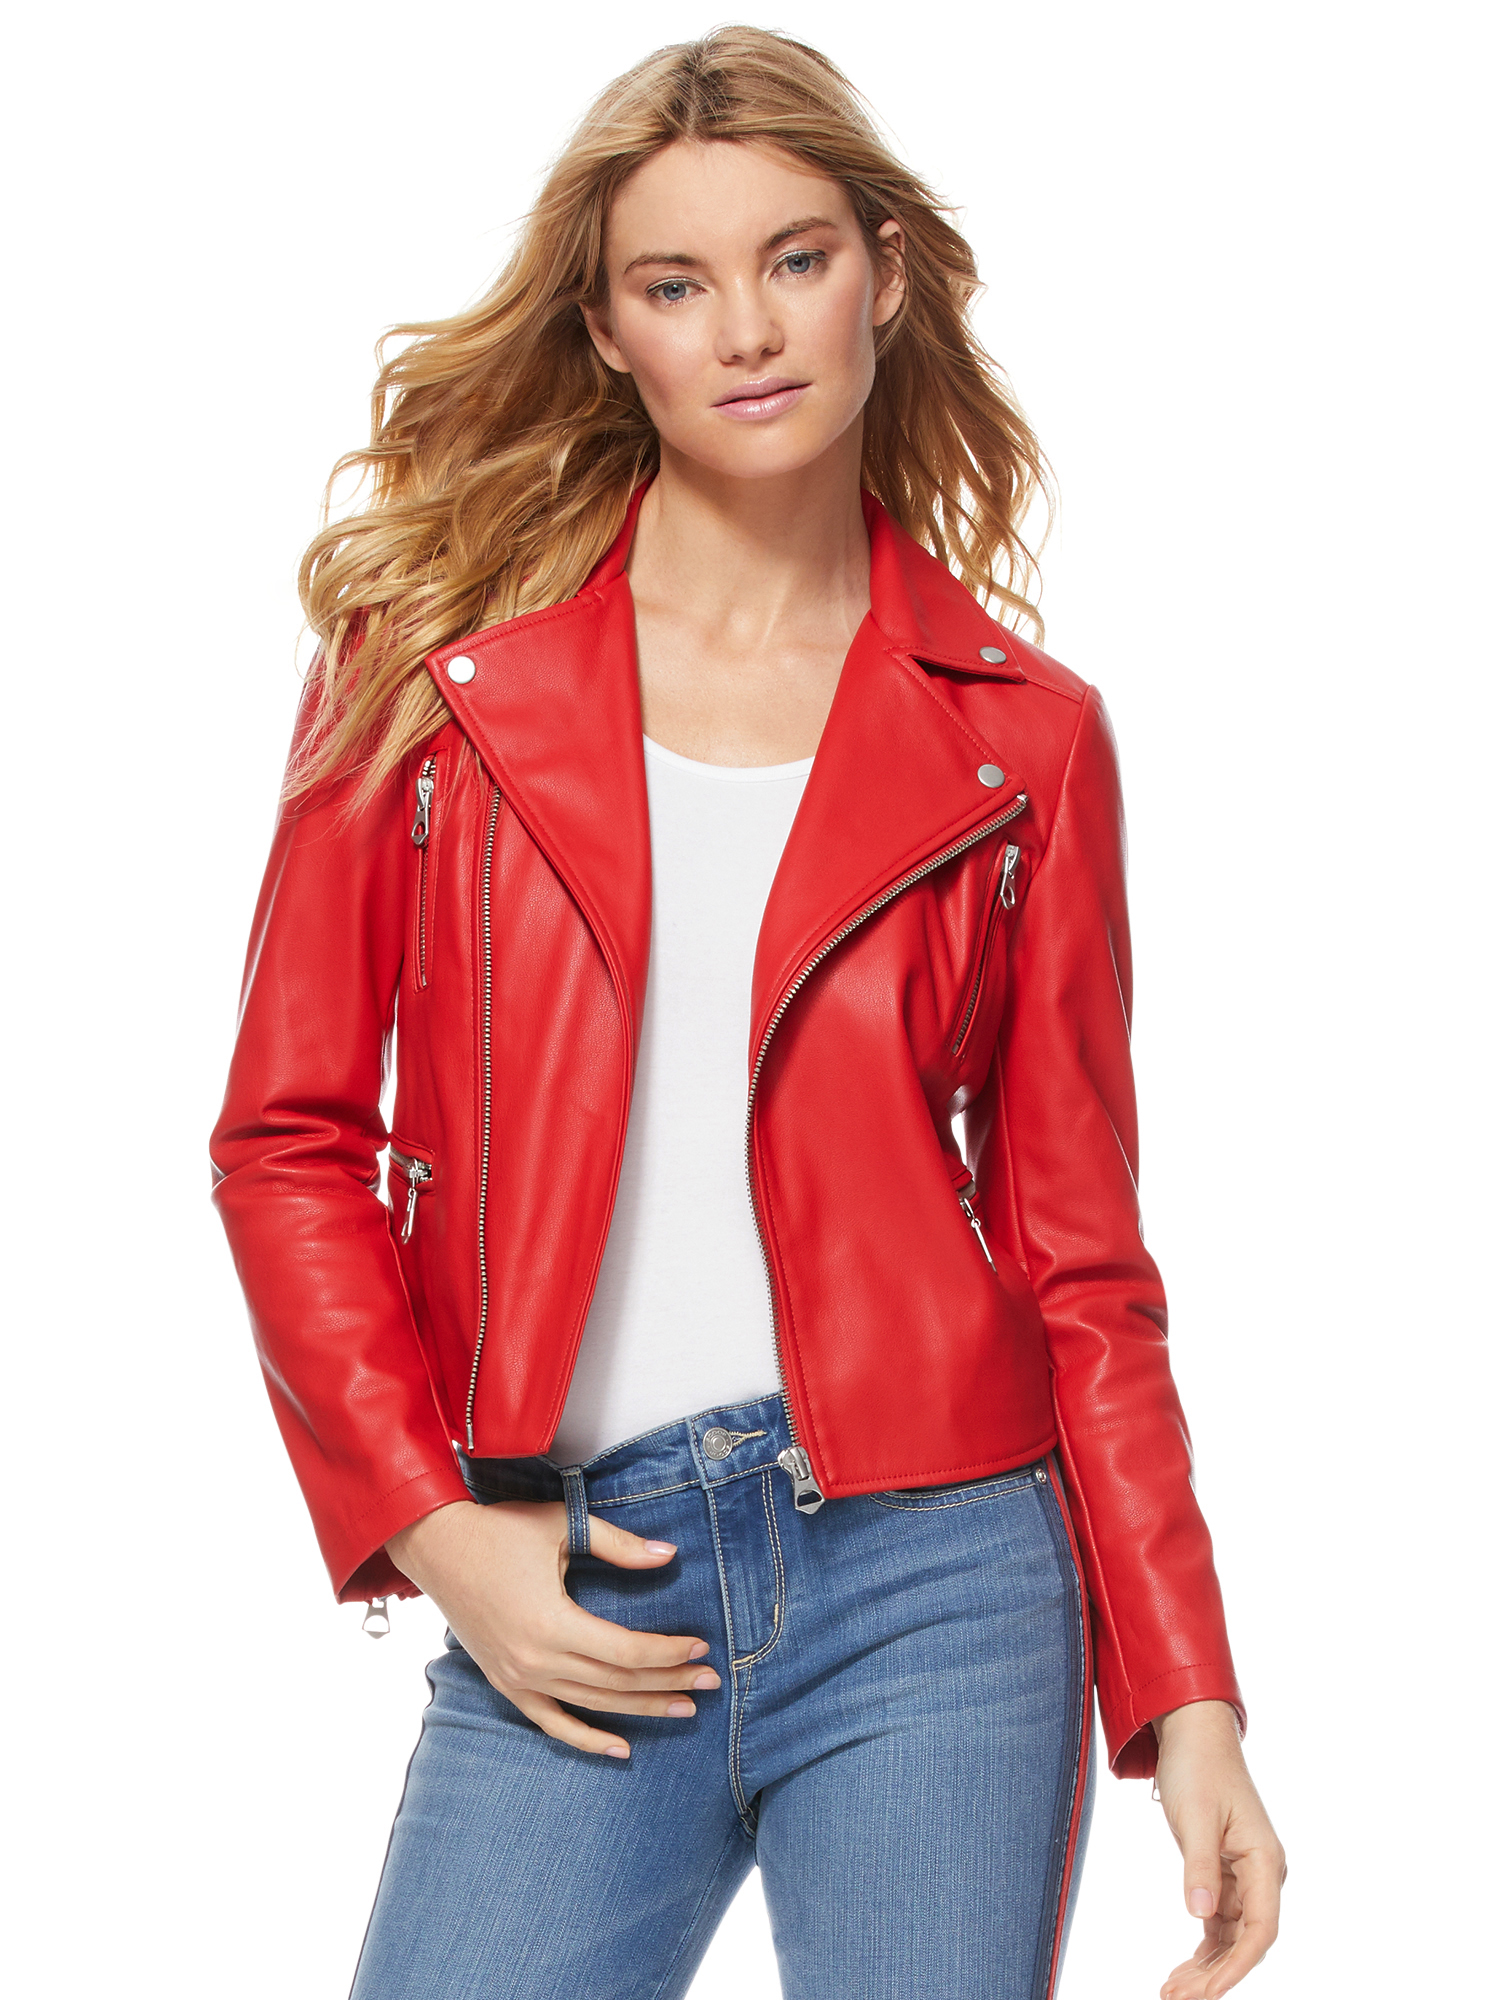 Scoop Women's Faux Leather Moto Jacket - image 1 of 6